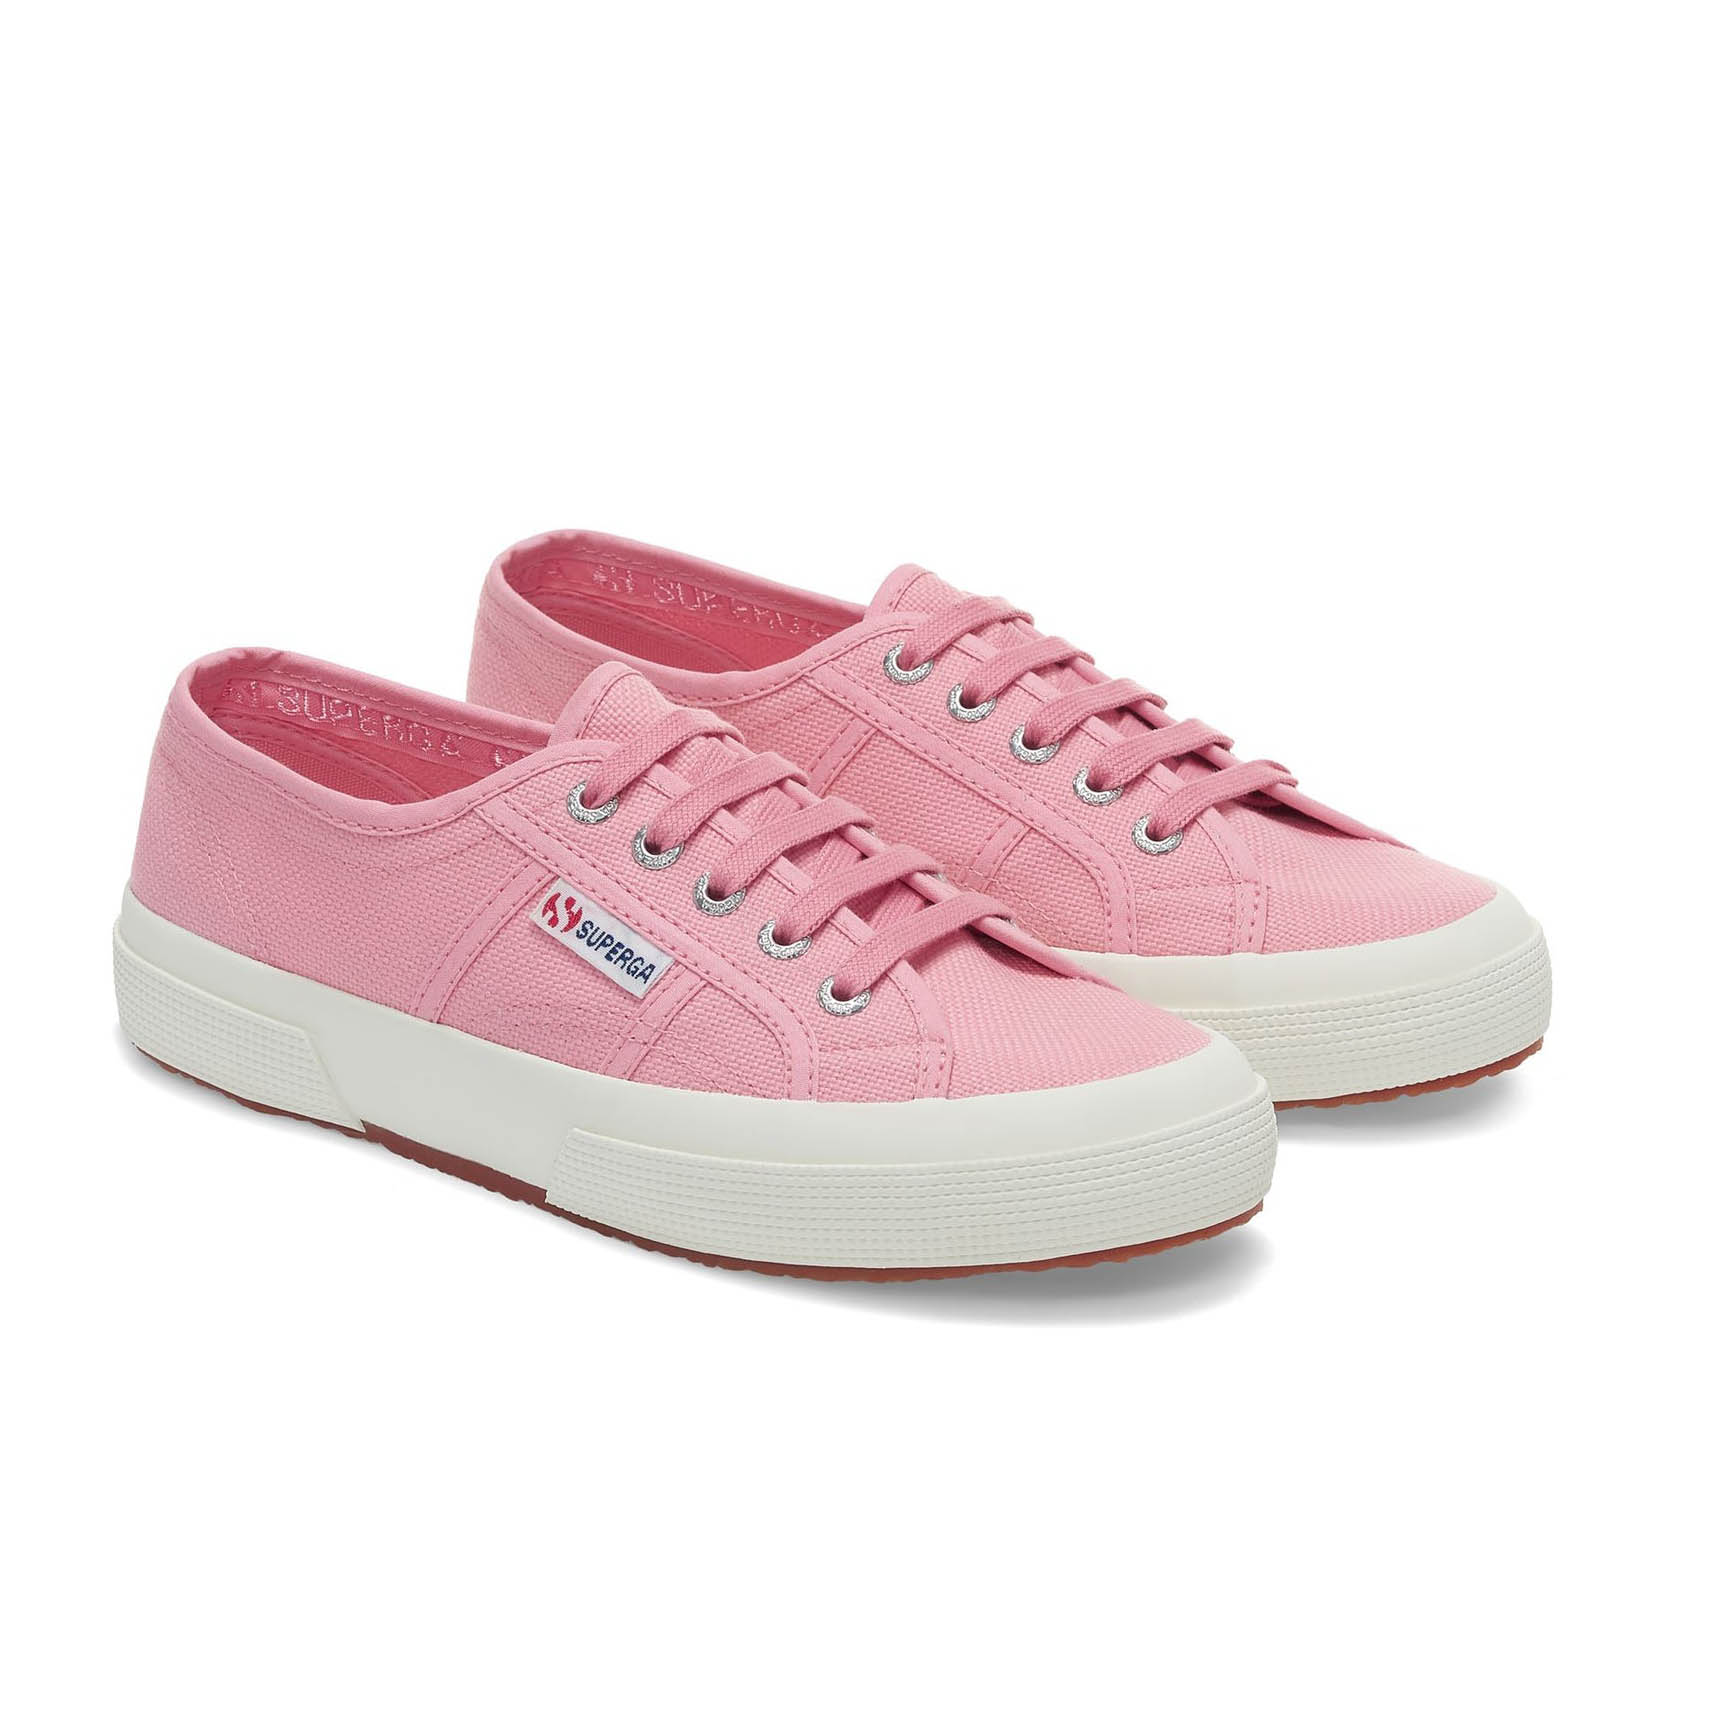 Superga Sneakers 2750 Jcot Classic Pink favorio